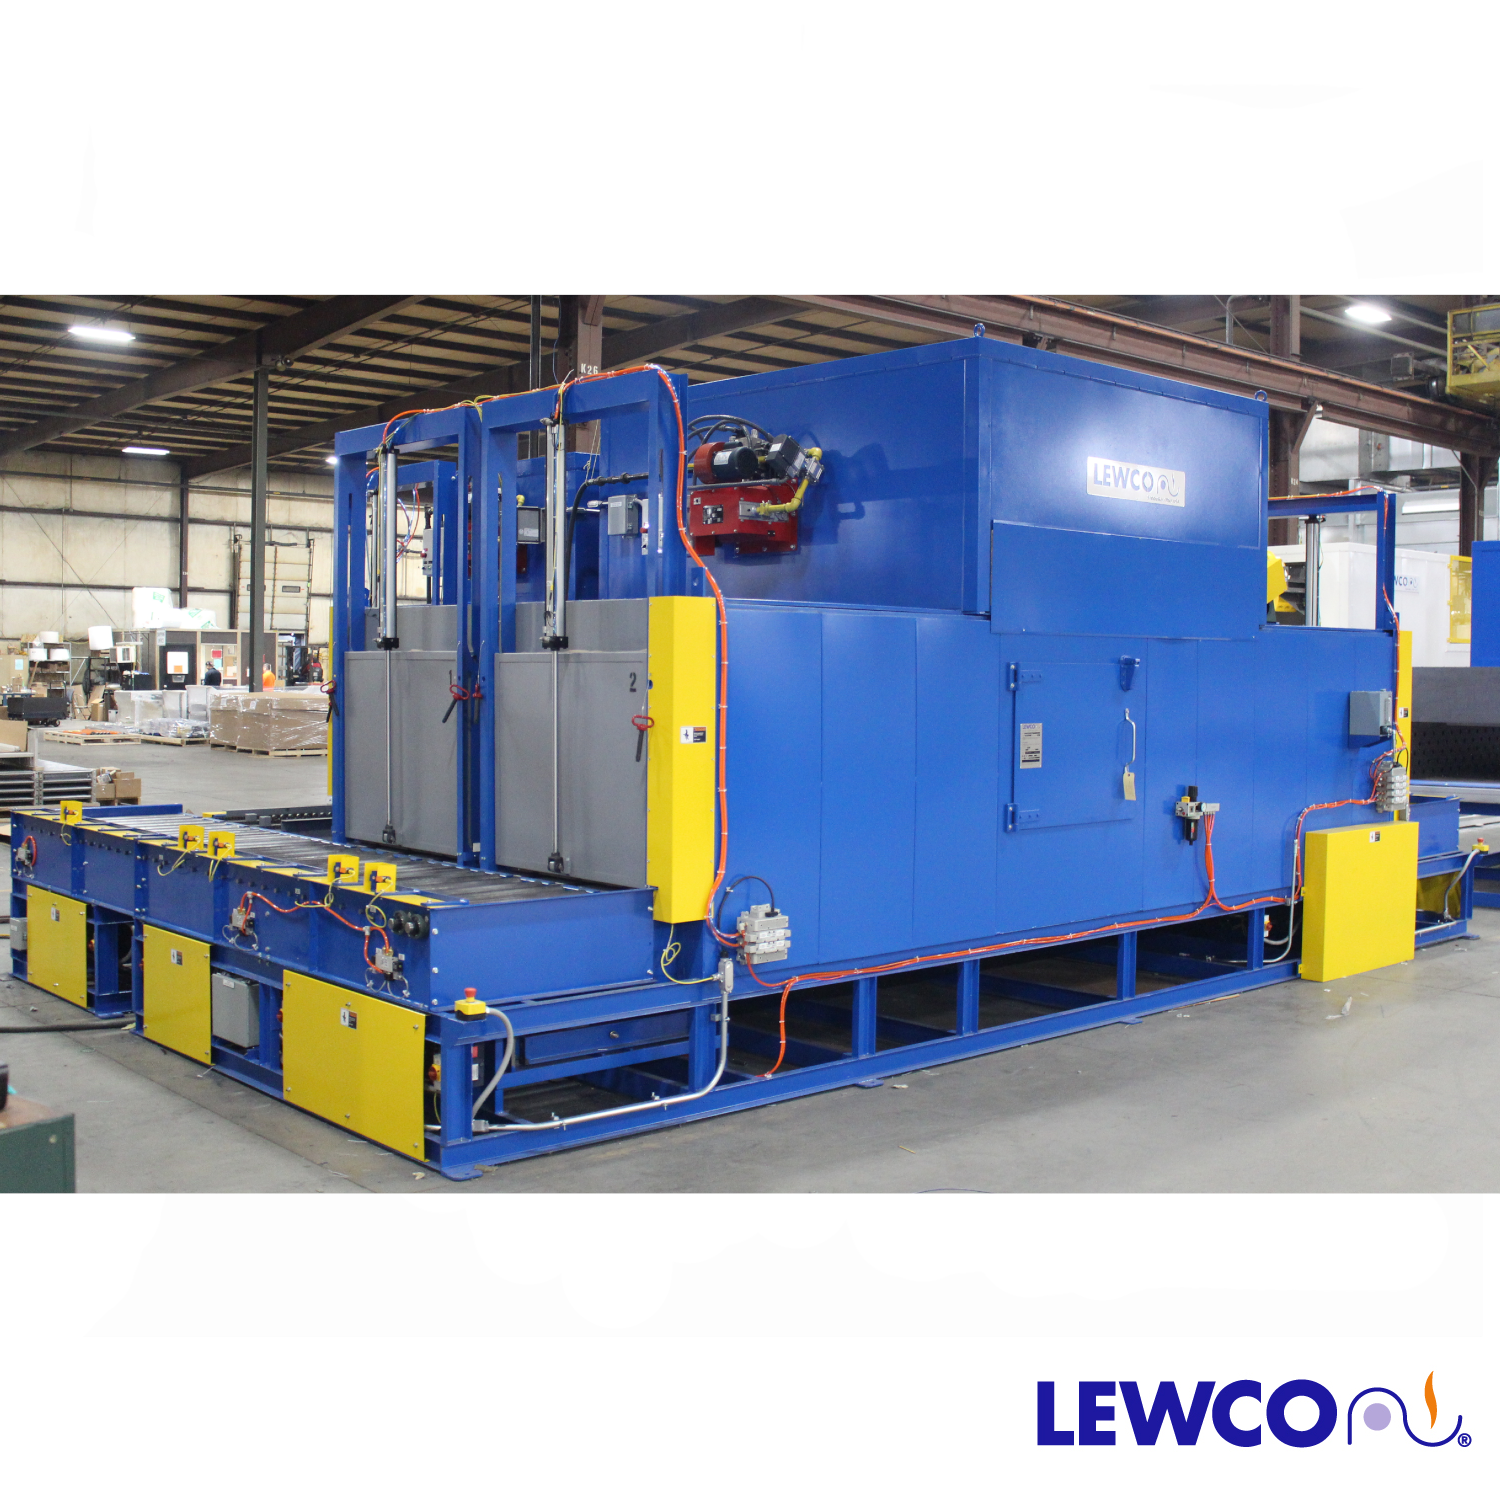 Composite Curing Oven Model: EWR03EH  LEWCO, Inc. Industrial Oven  Manufacturer